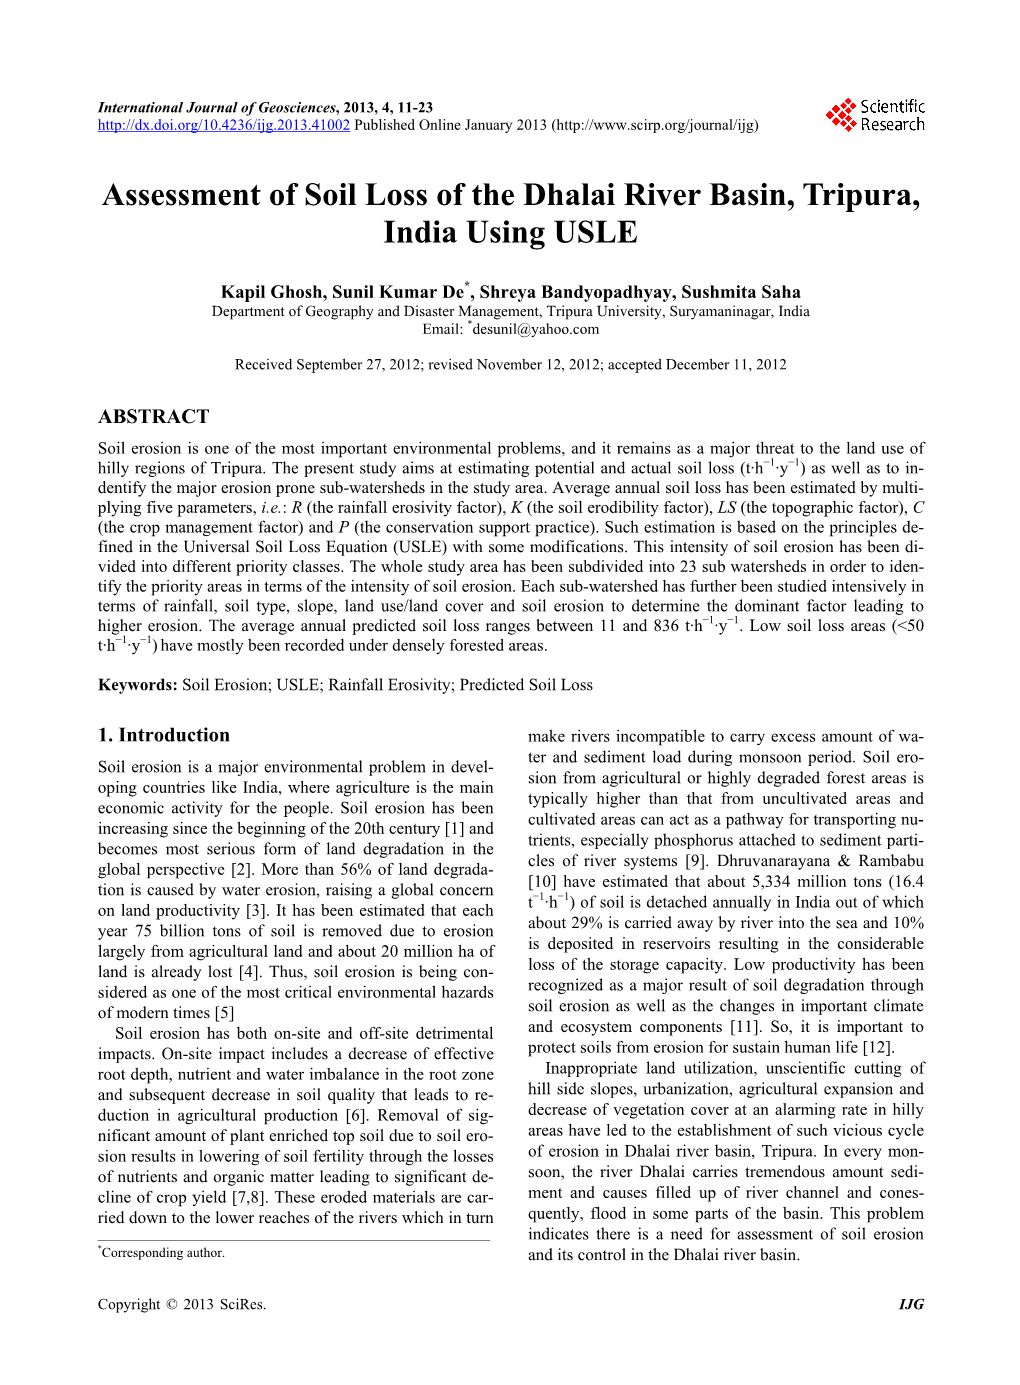 Assessment of Soil Loss of the Dhalai River Basin, Tripura, India Using USLE